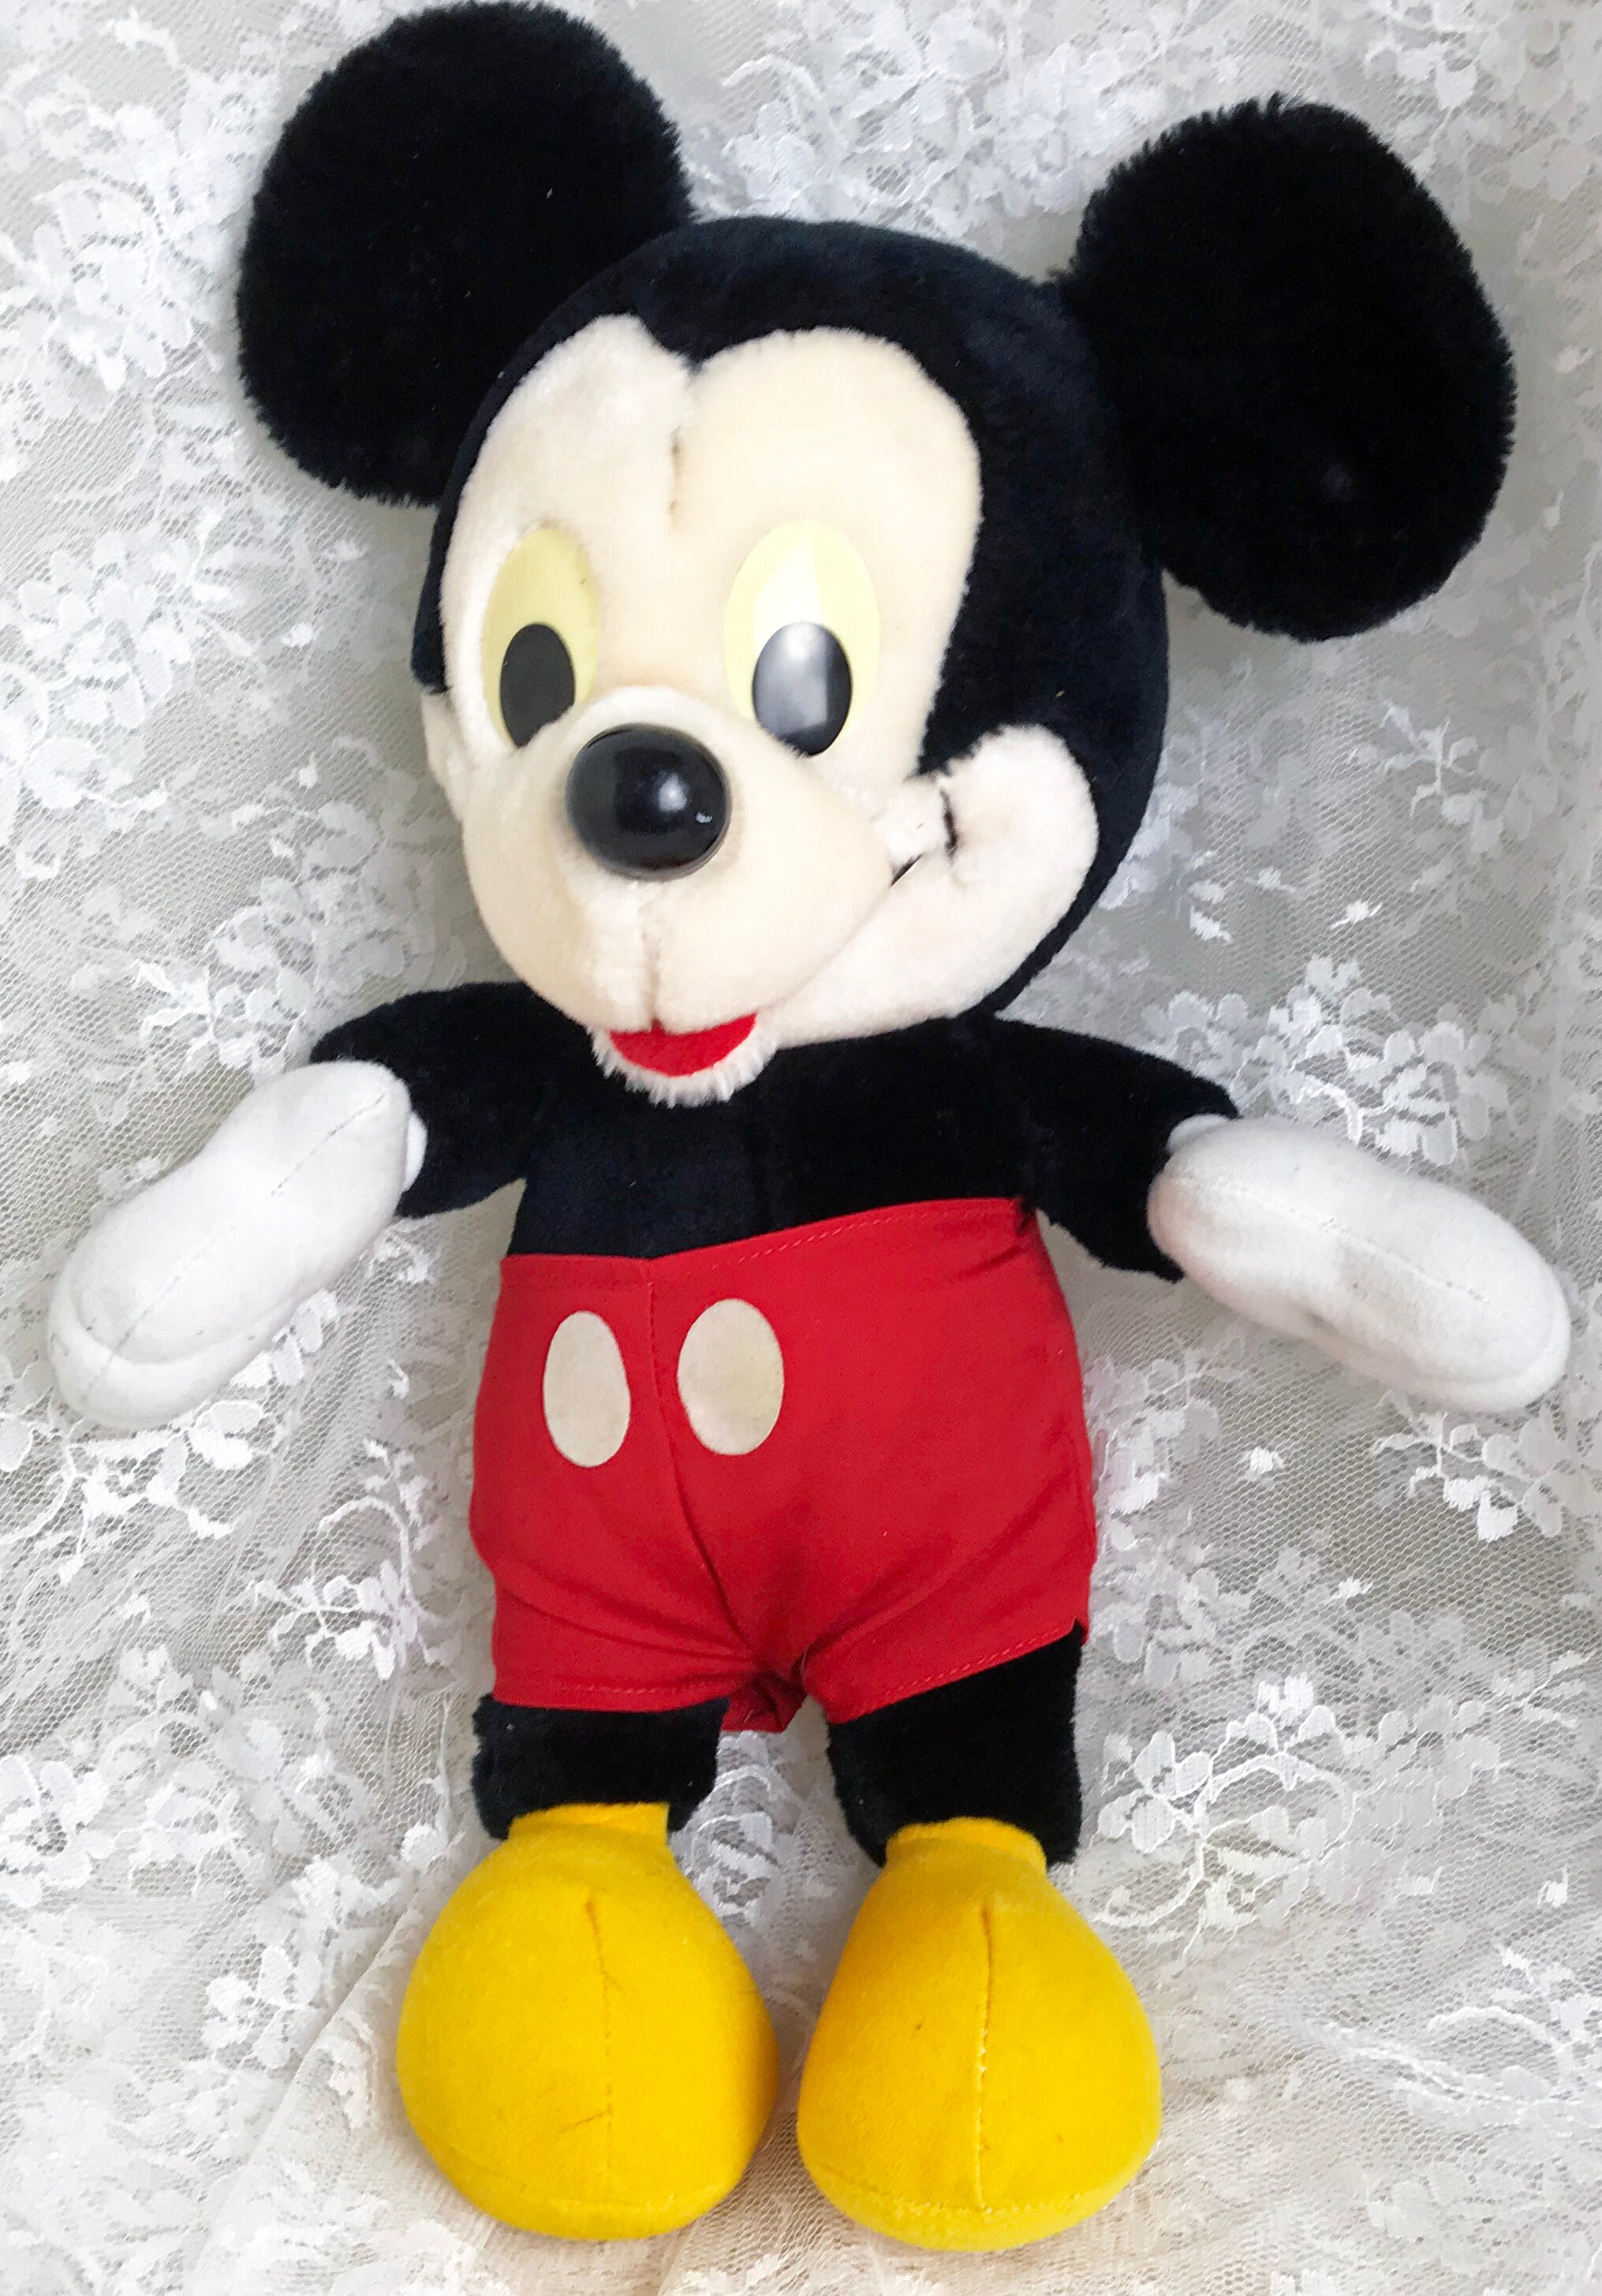 Vintage Plush Mickey Mouse Keychain Stuffed Animal 6" Tall